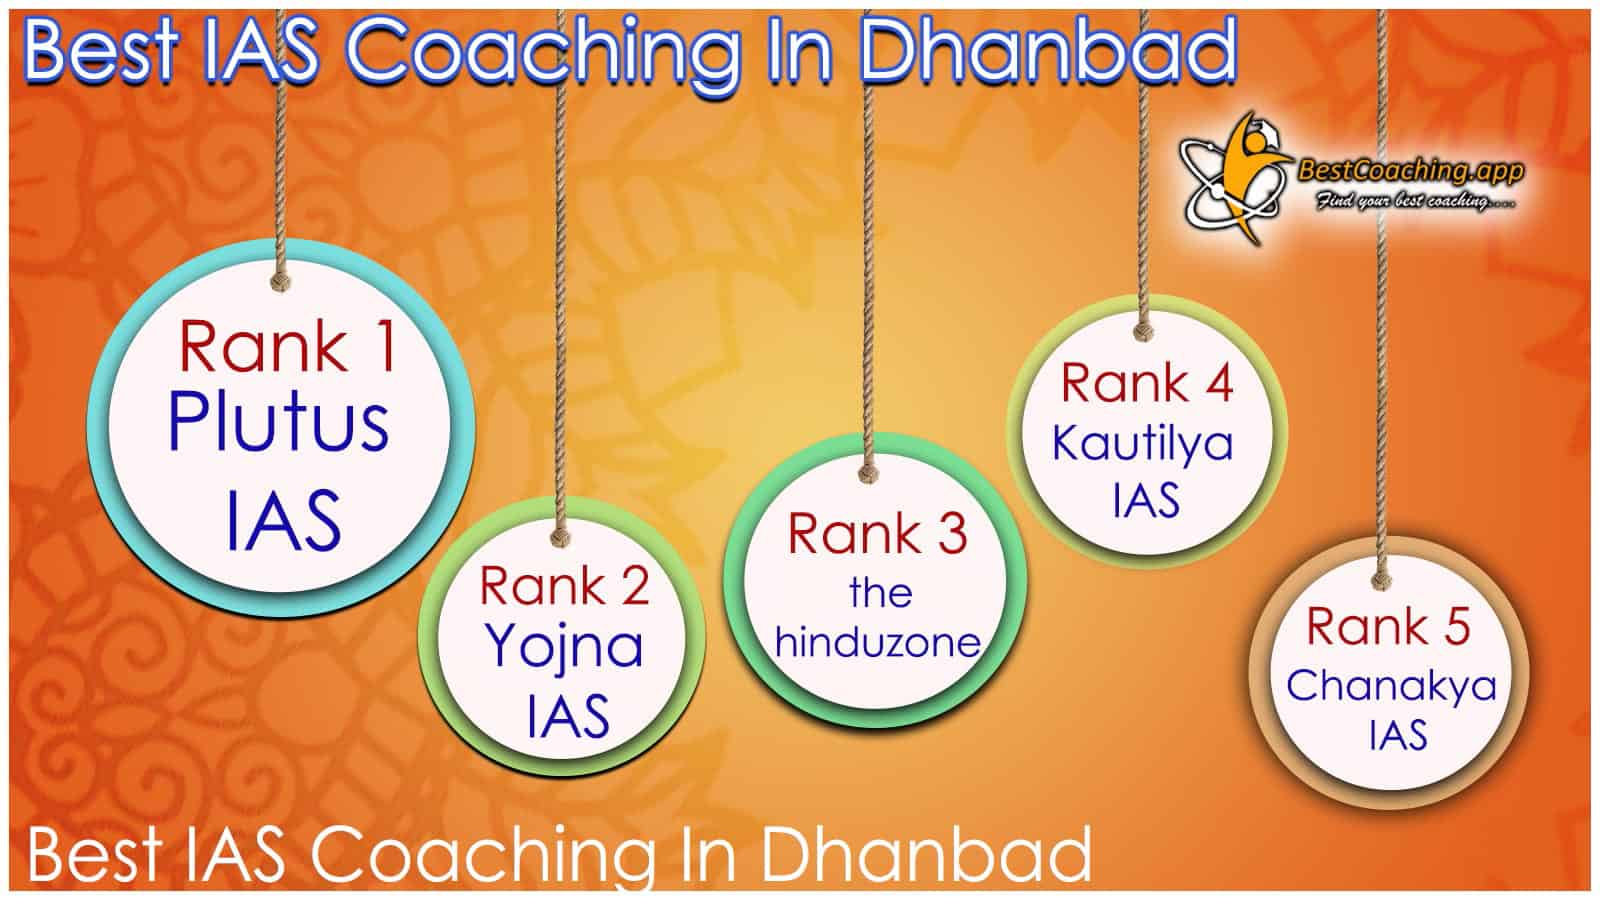 Best IAS Coaching In Dhanbad